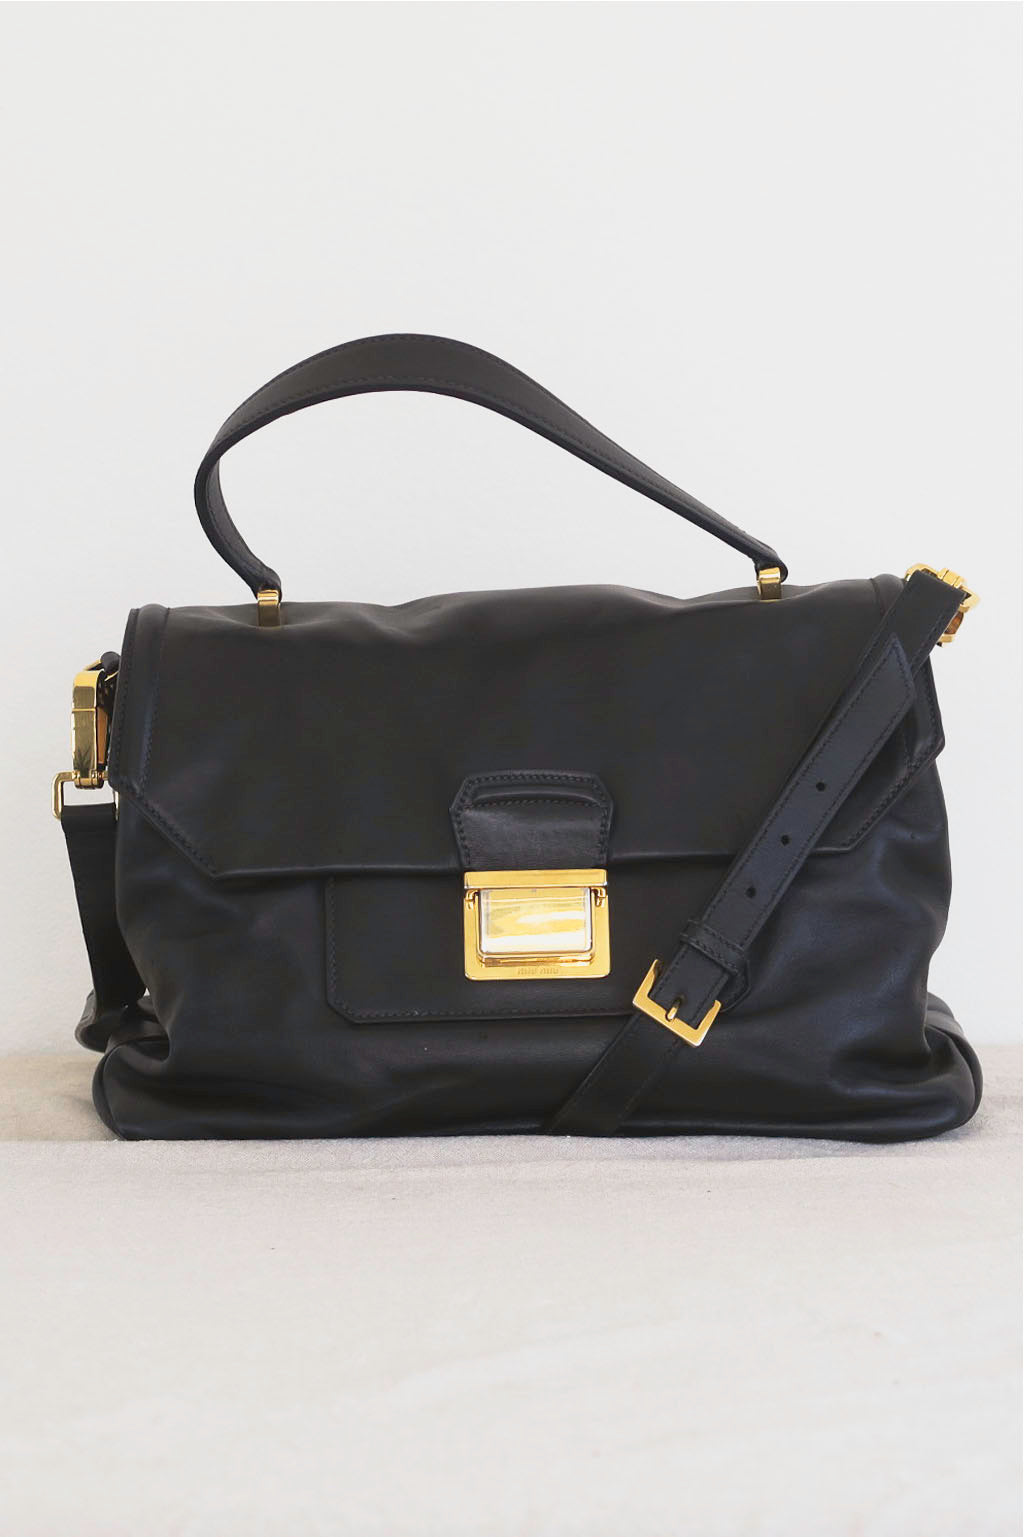 Miu Miu Black Leather Bag